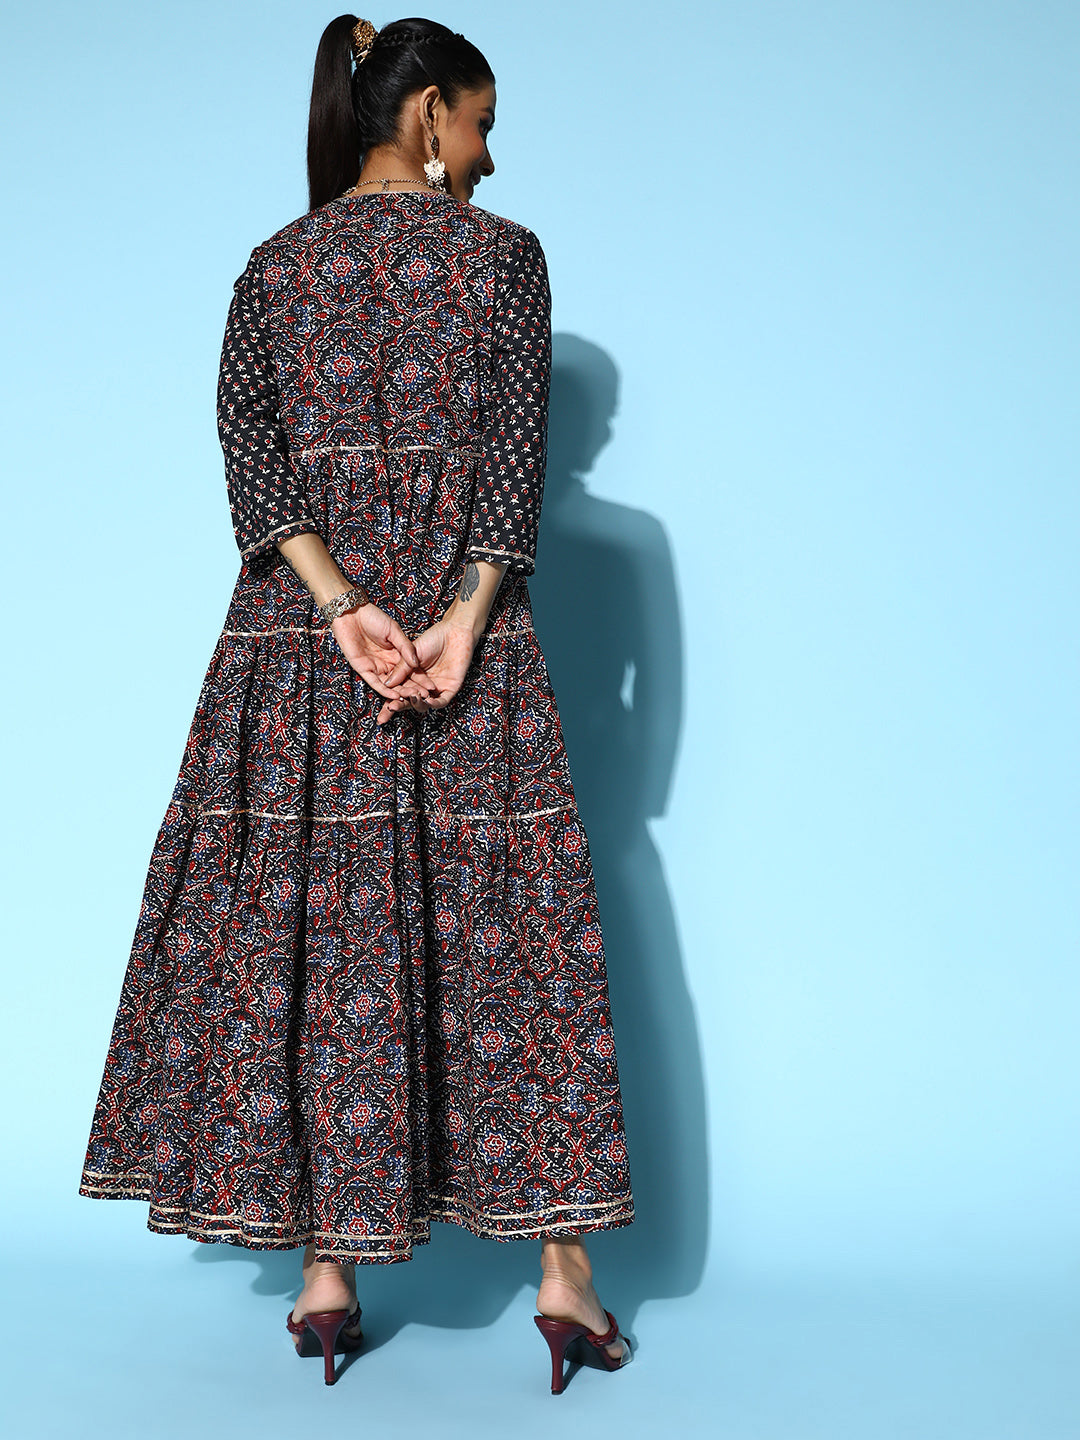 Sunehri Women's Cotton Black Embroidered Anarkali Dress With Ethnic Jacket